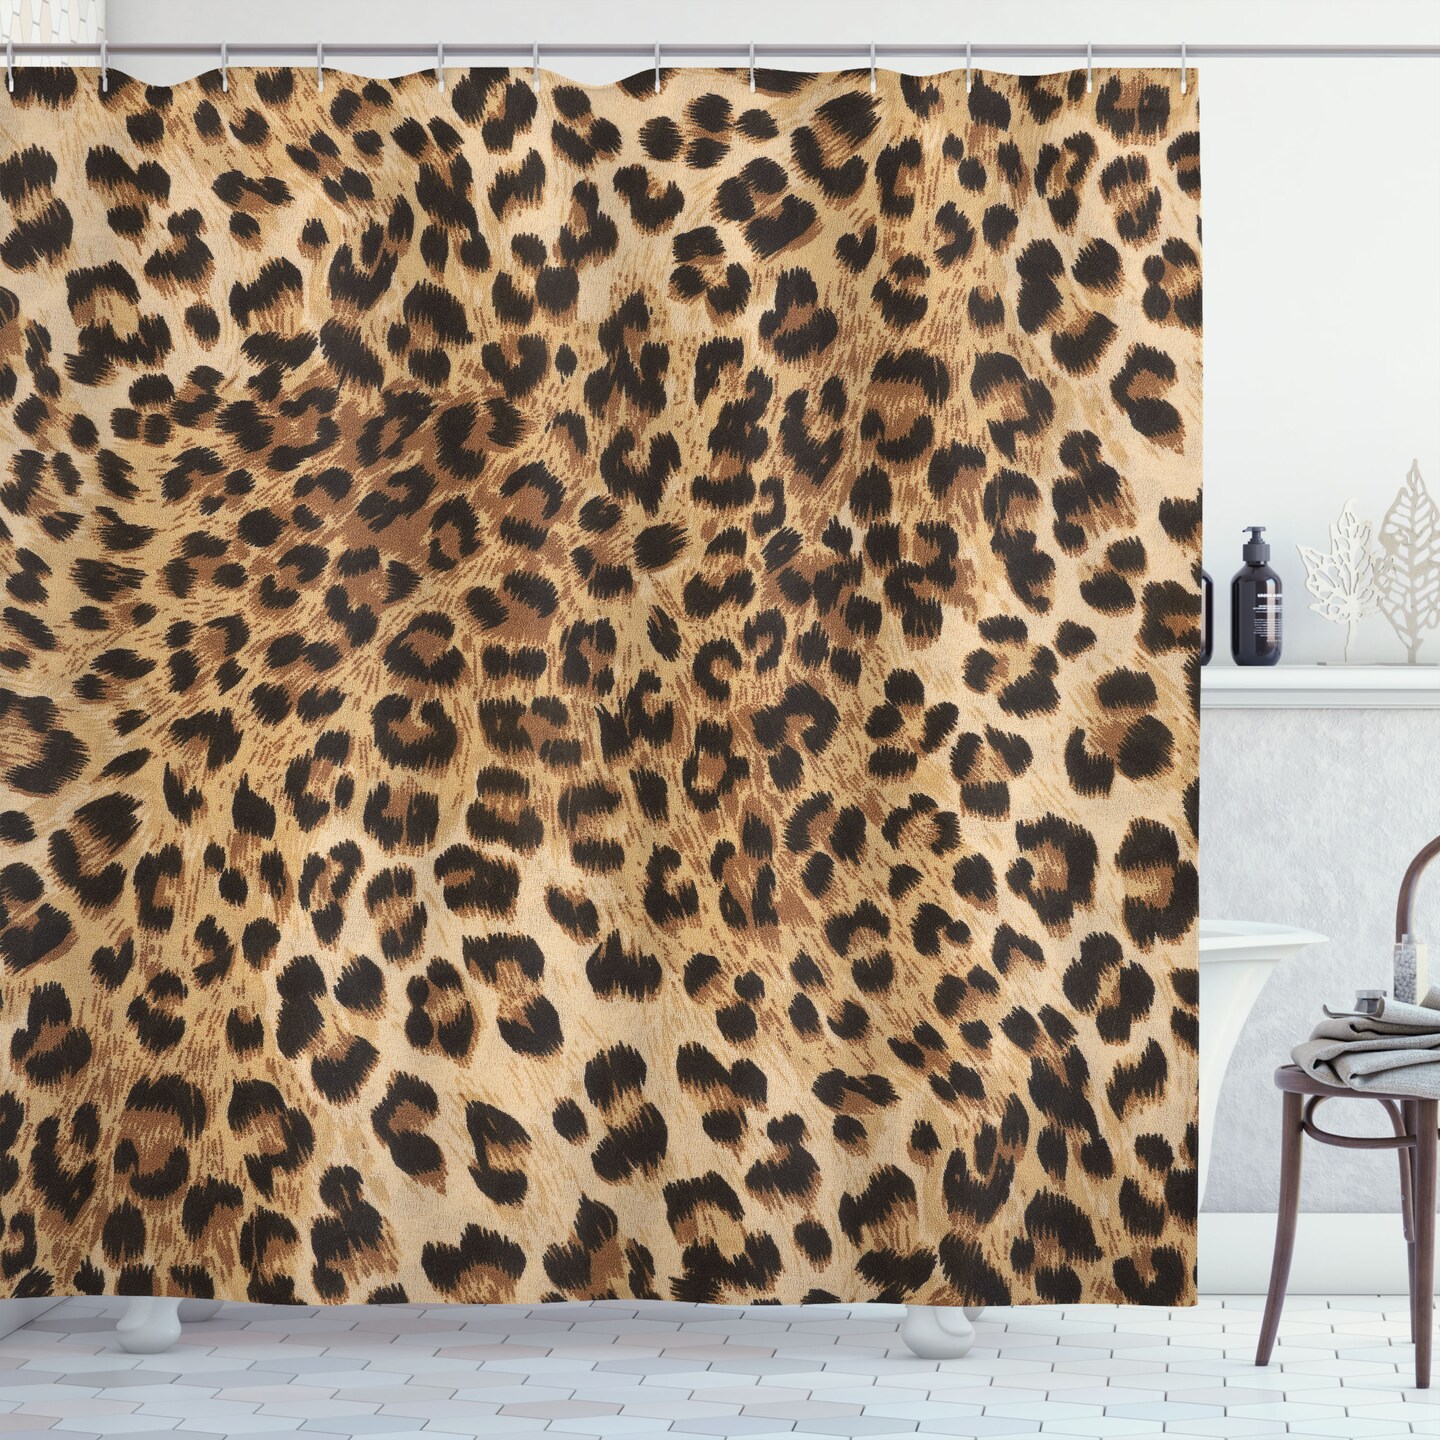 Elephant Skin Fabric, Wallpaper and Home Decor